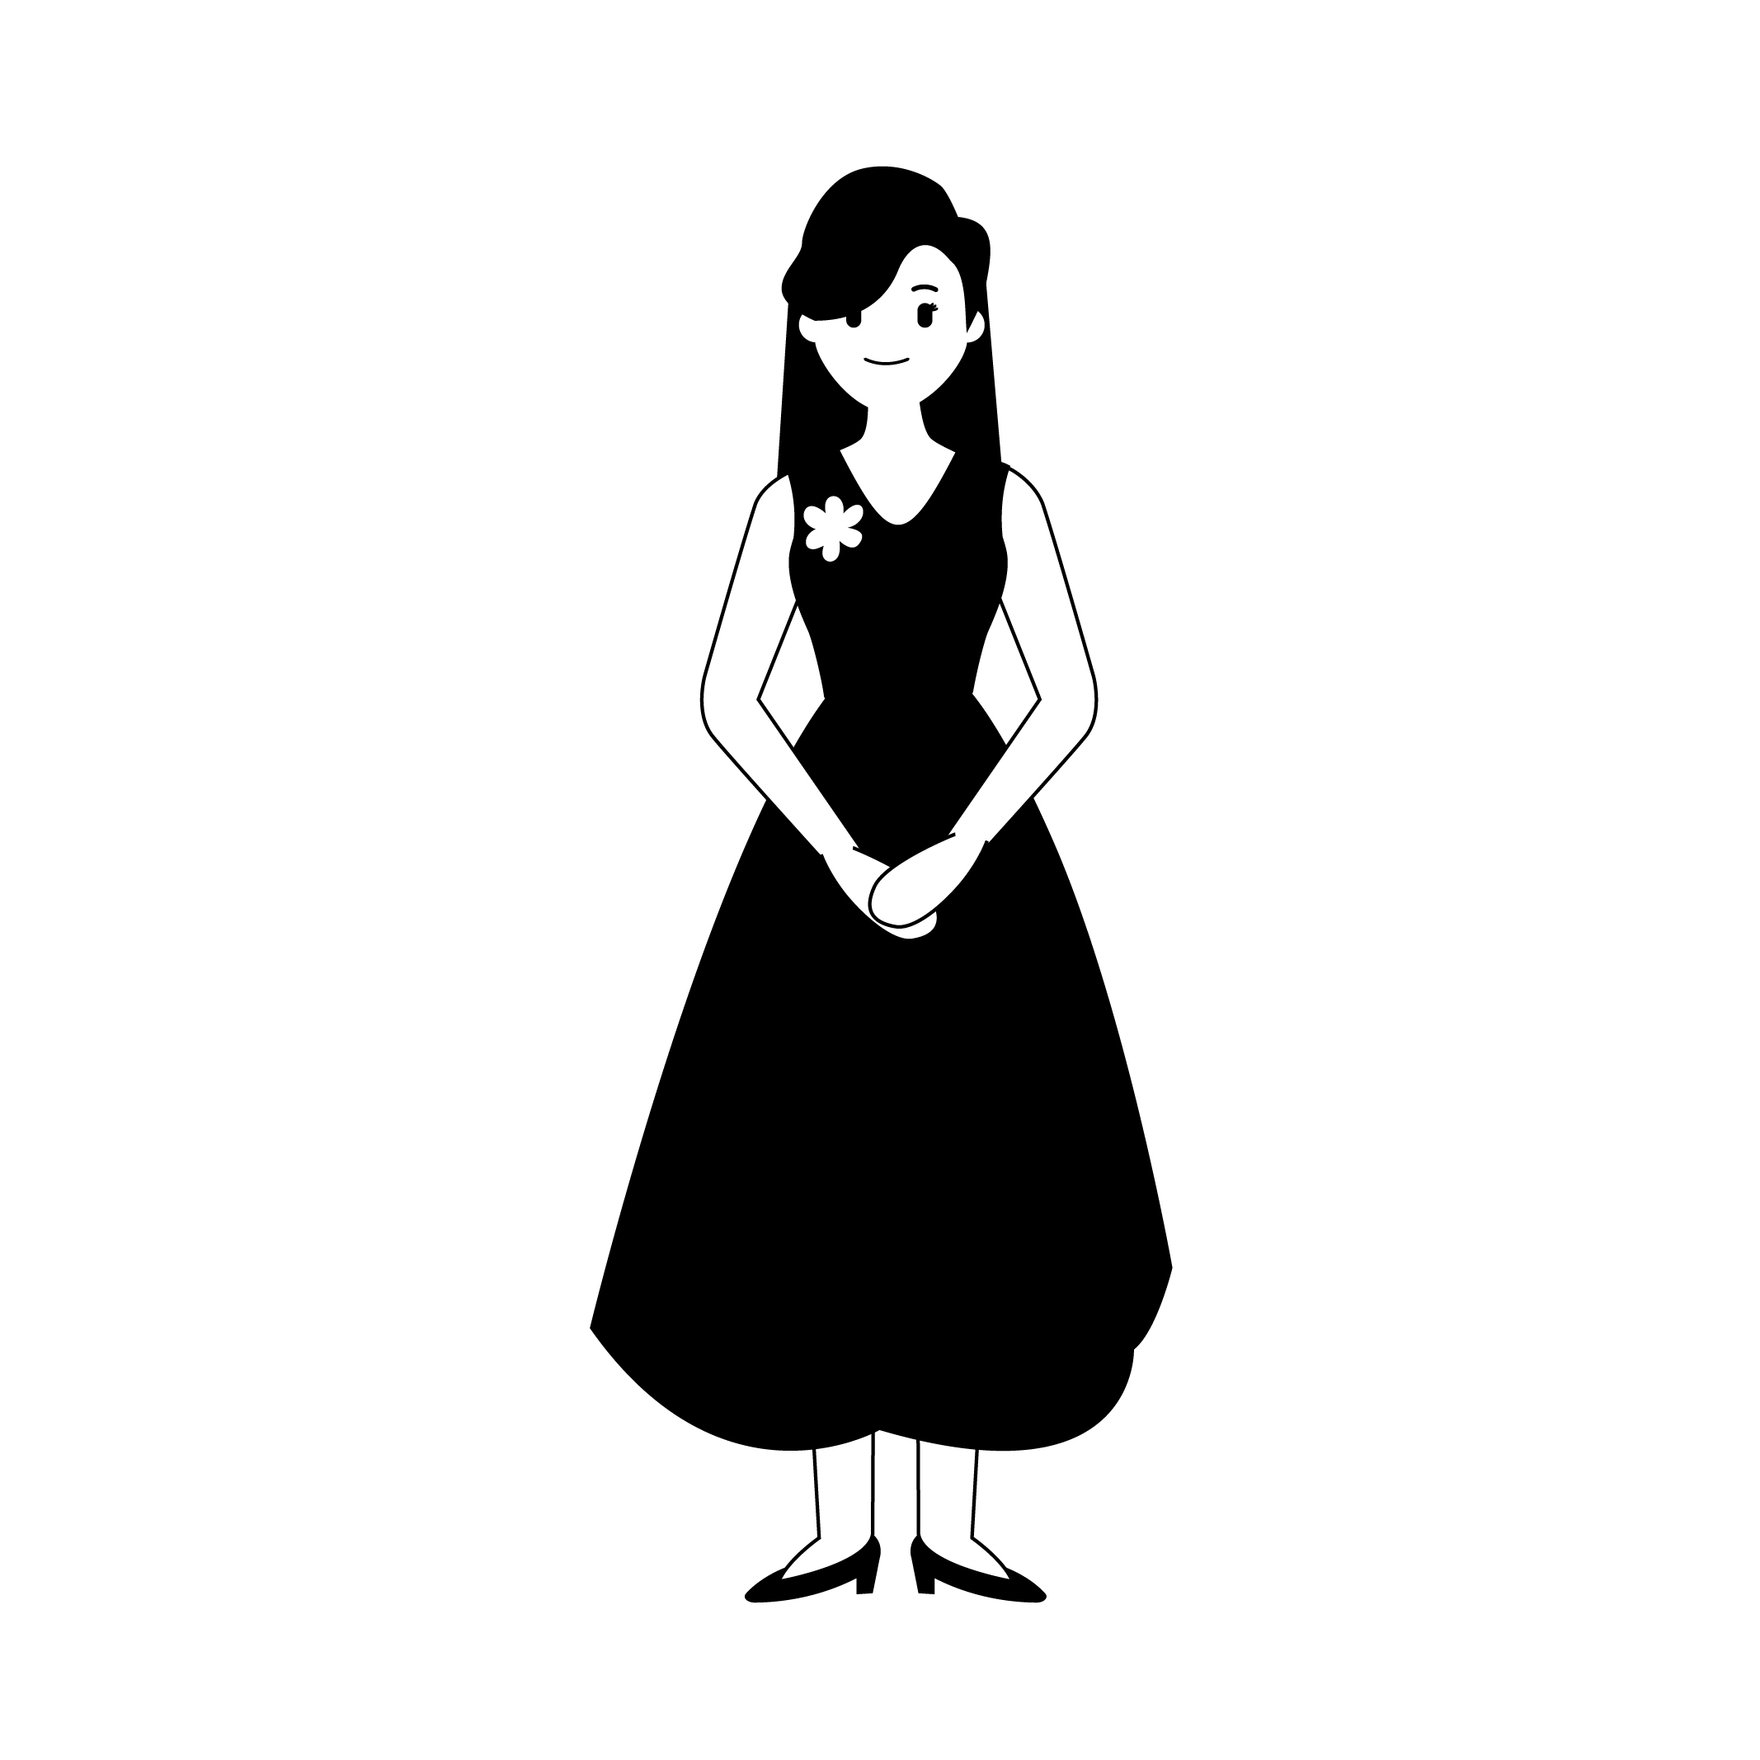 Bridesmaid Silhouette in Illustrator, EPS, SVG, JPG, PNG